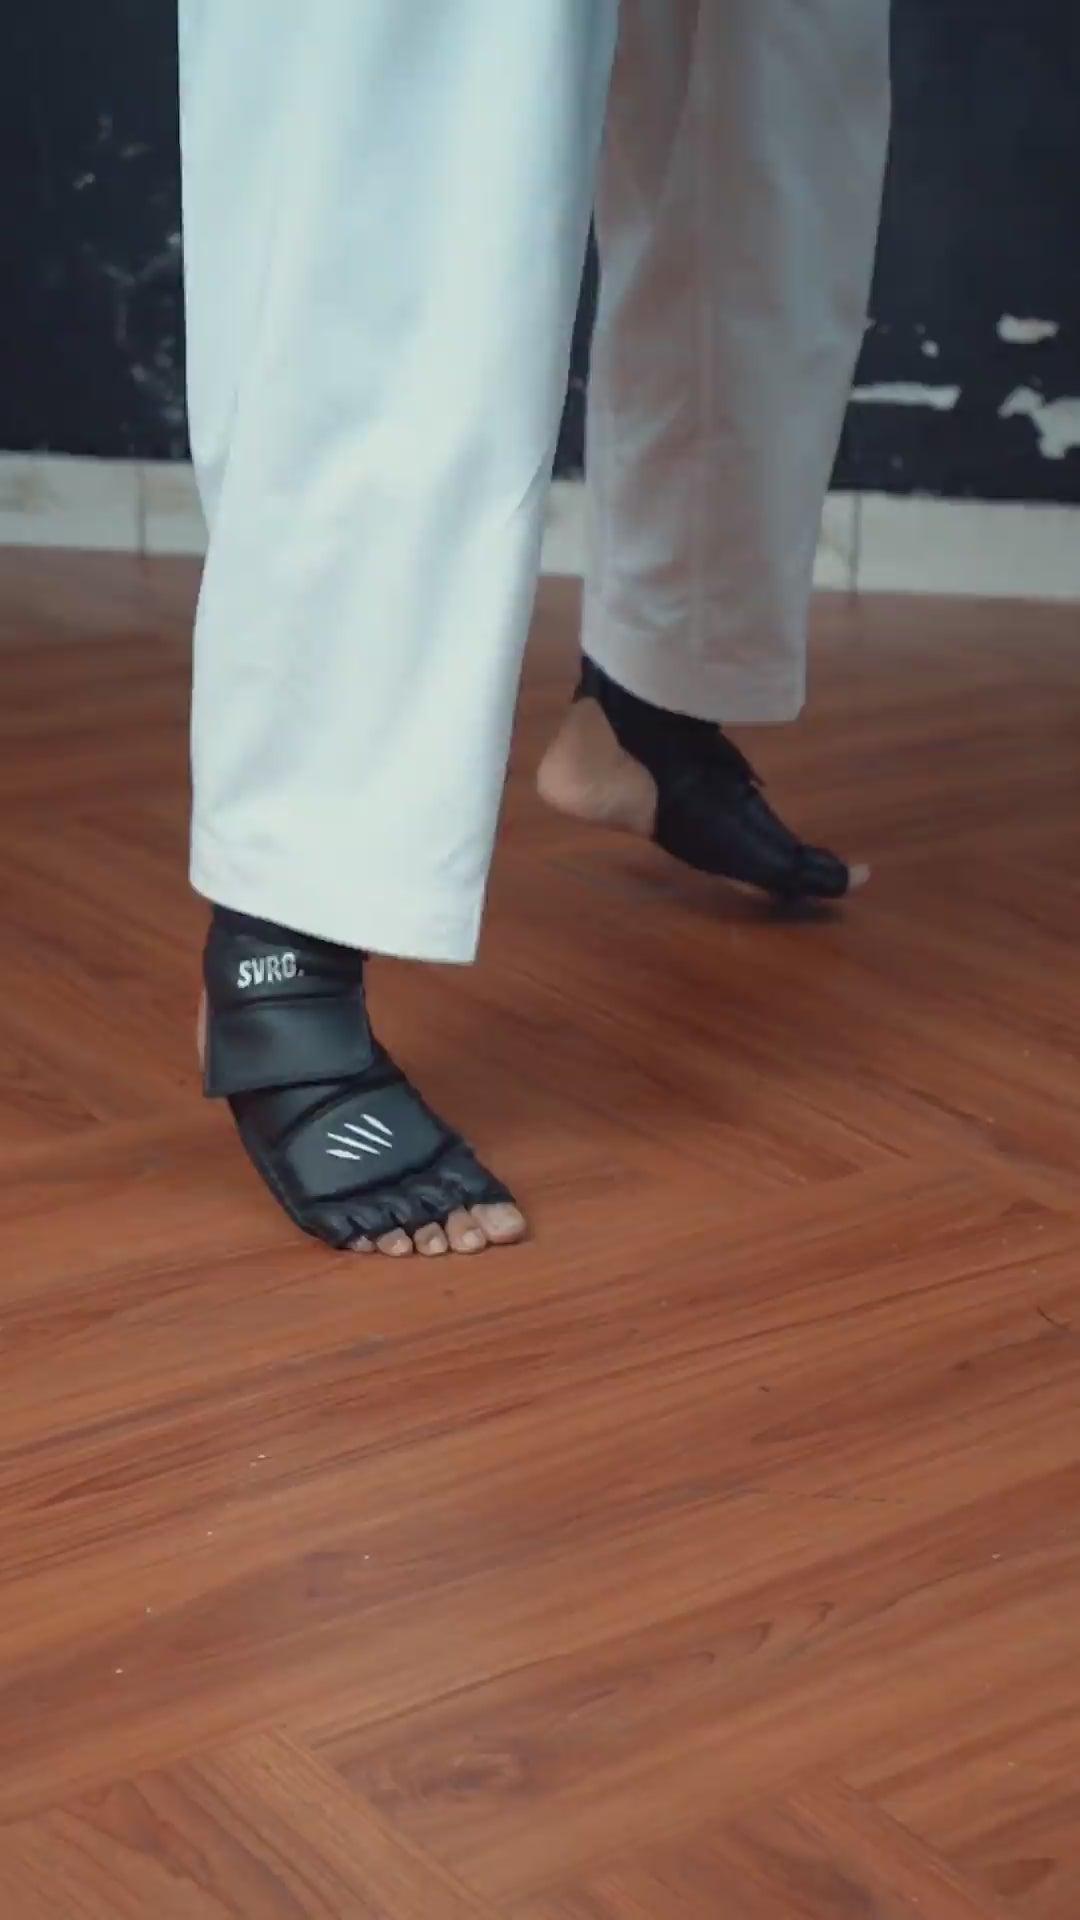 Foot Protector Taekwondo